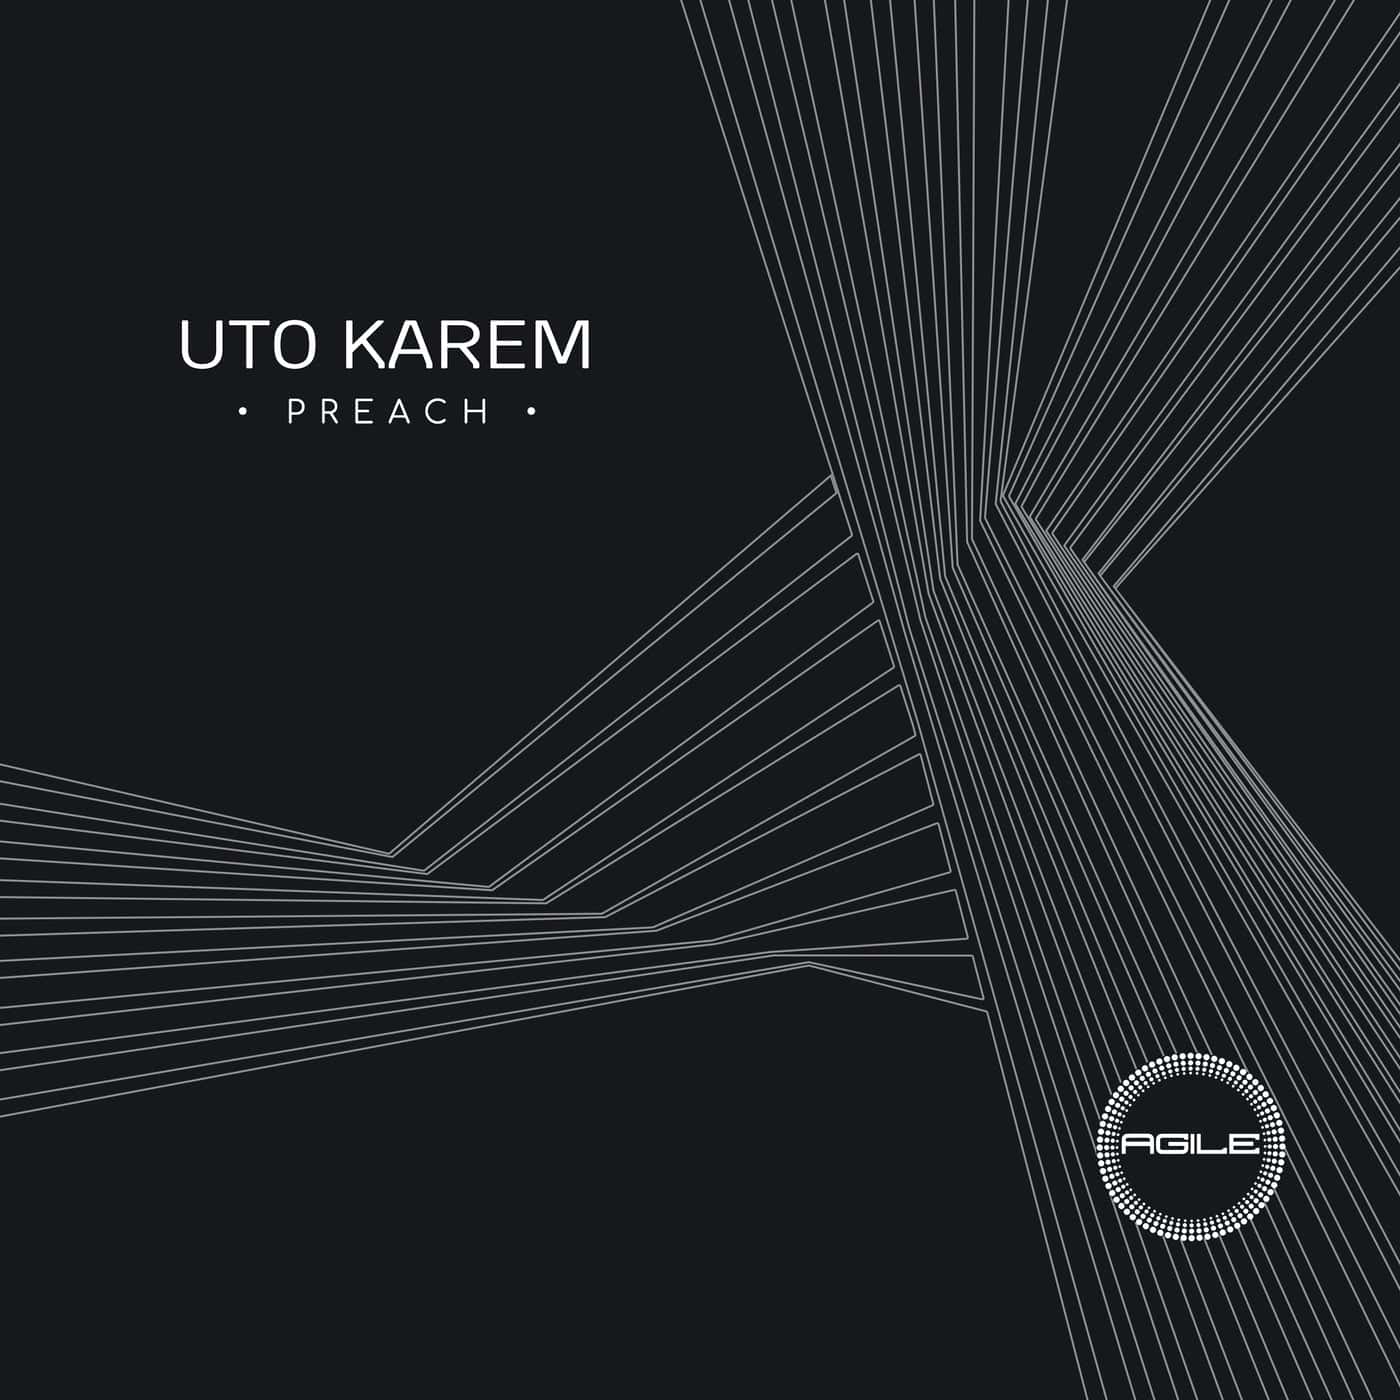 Download Uto Karem - Preach on Electrobuzz